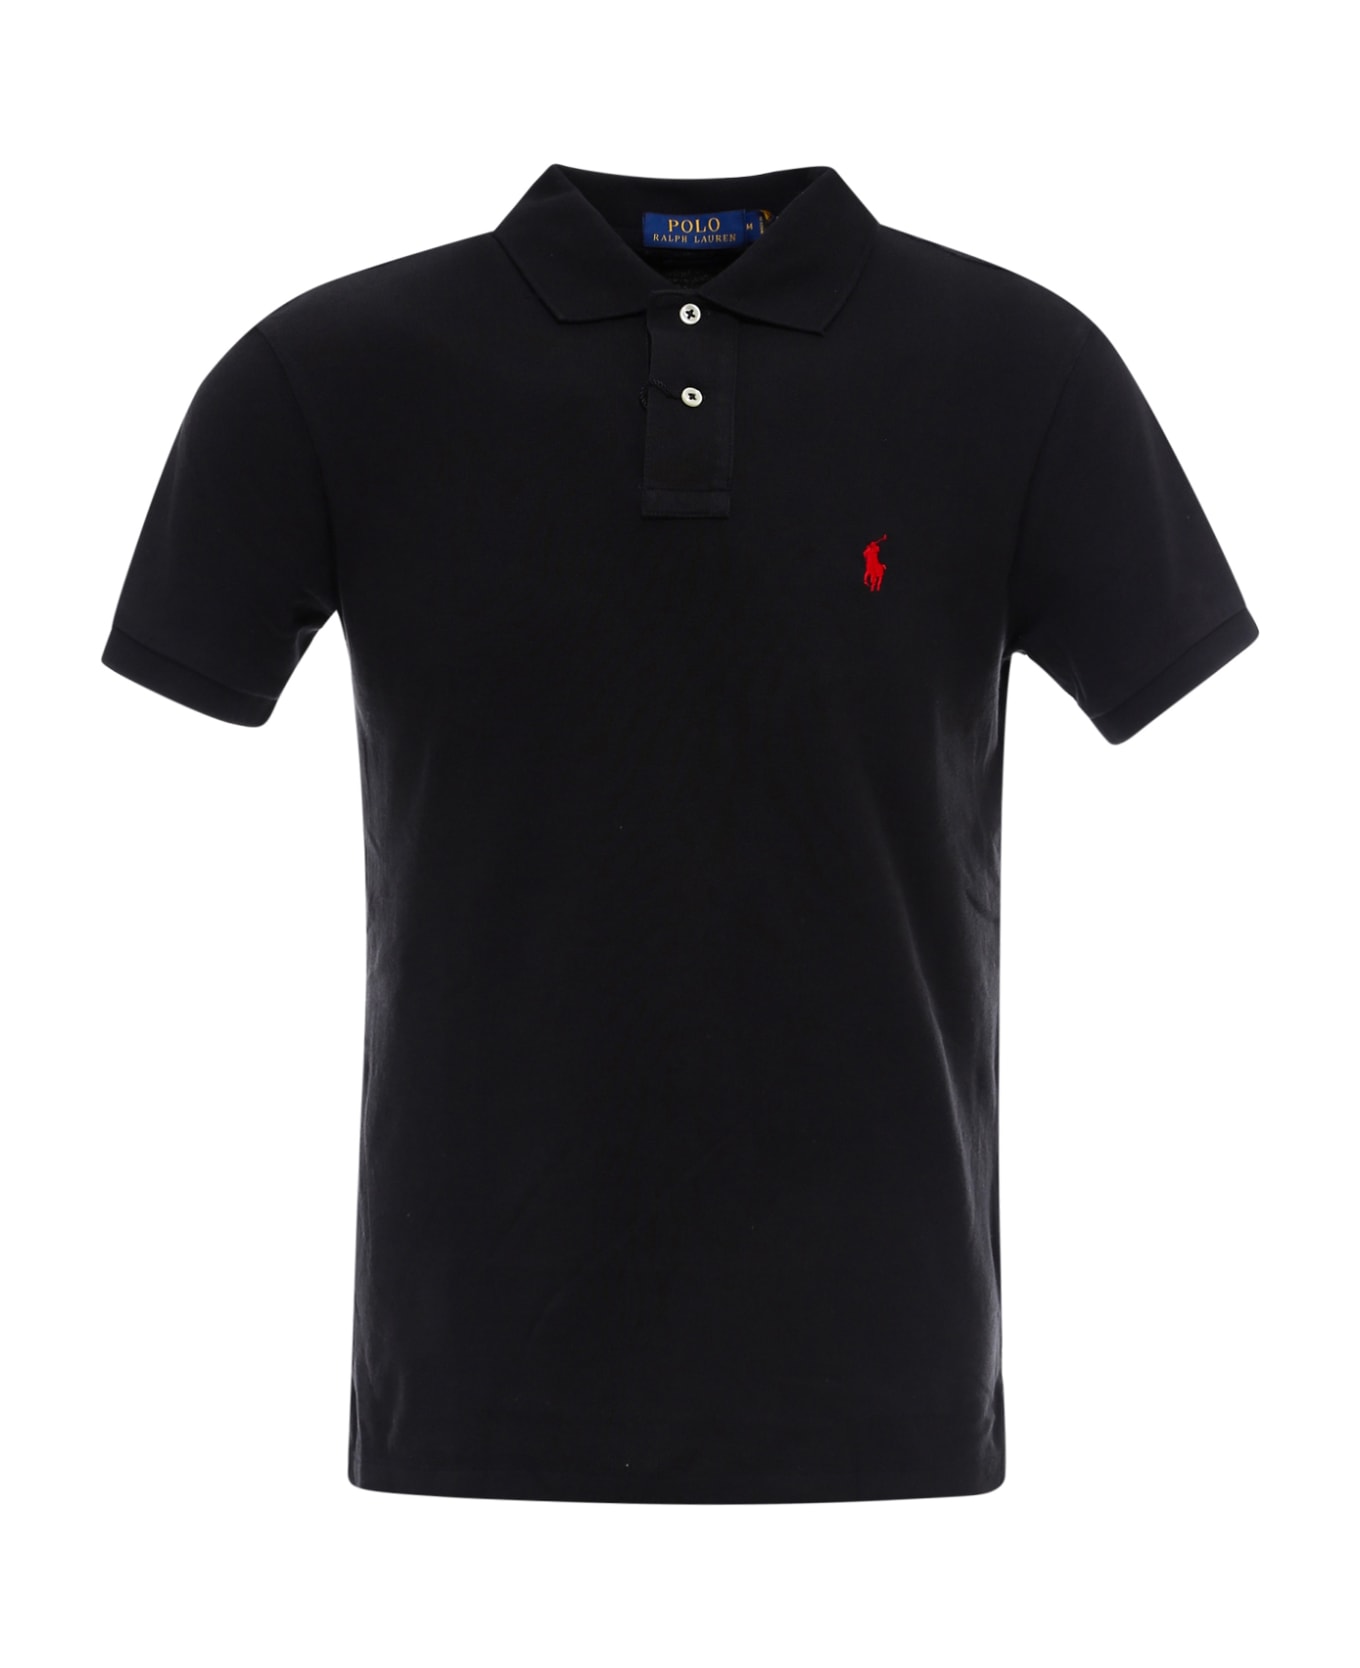 Polo Ralph Lauren Polo Shirt - Polo black ポロシャツ